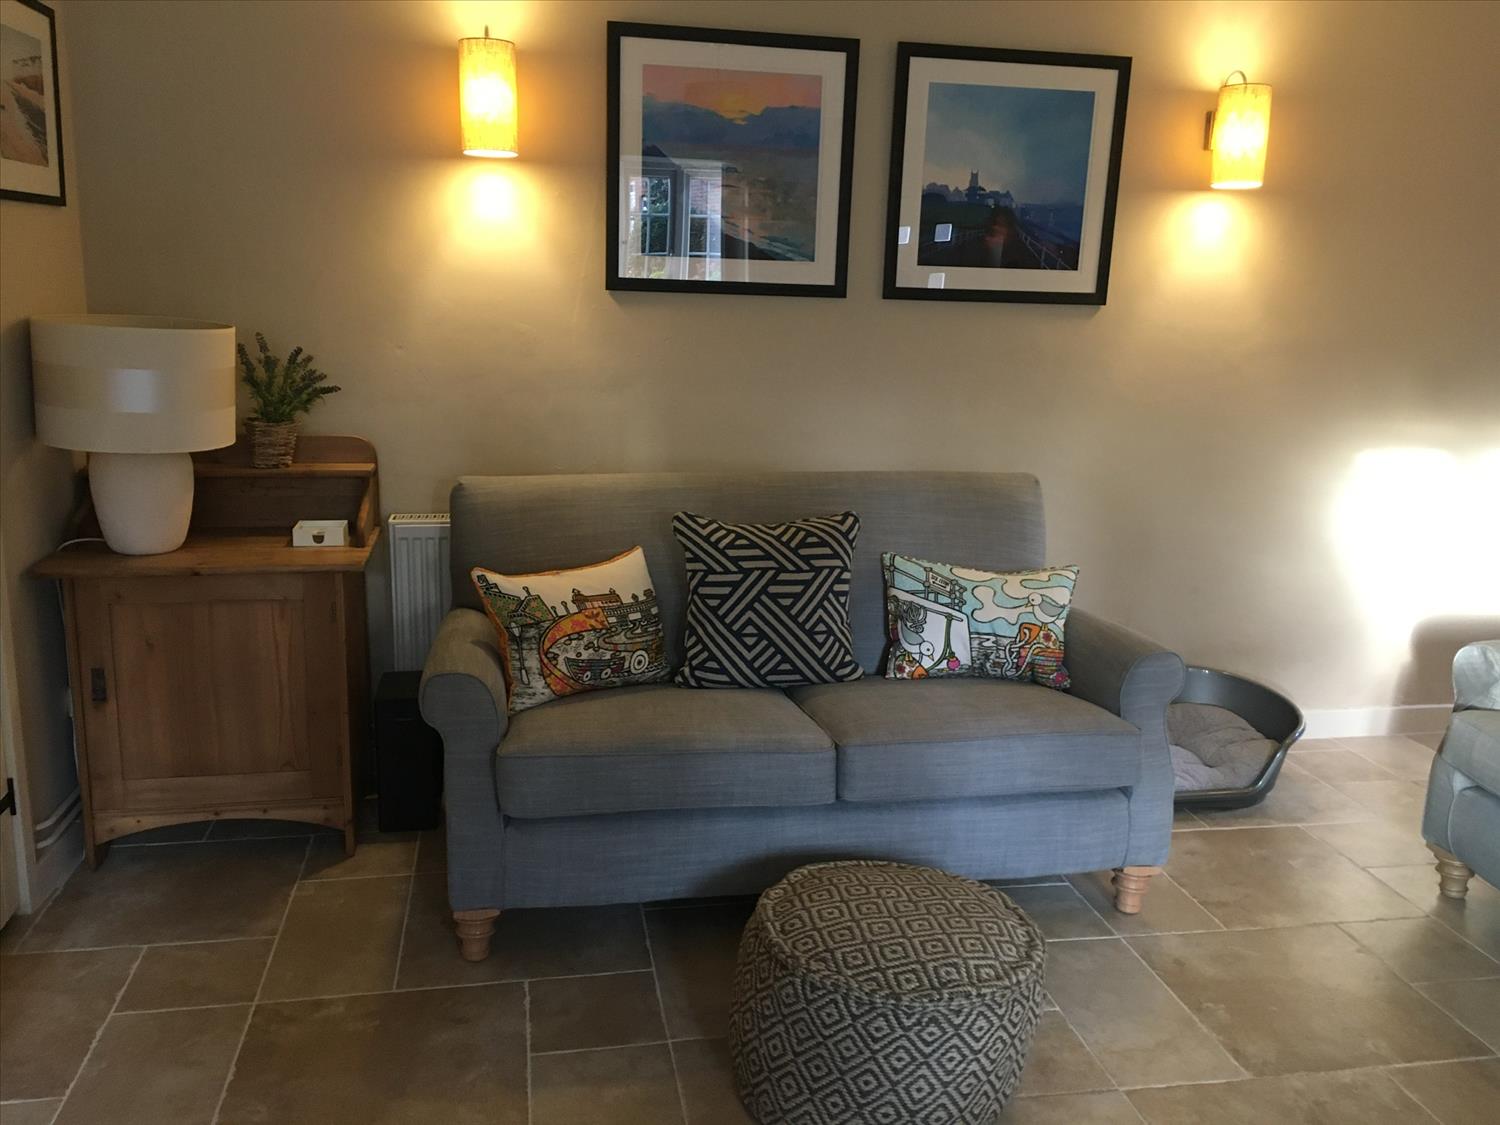 Sofa in living room 9 Melinda Cottage East Runton @NorfolkCoastline